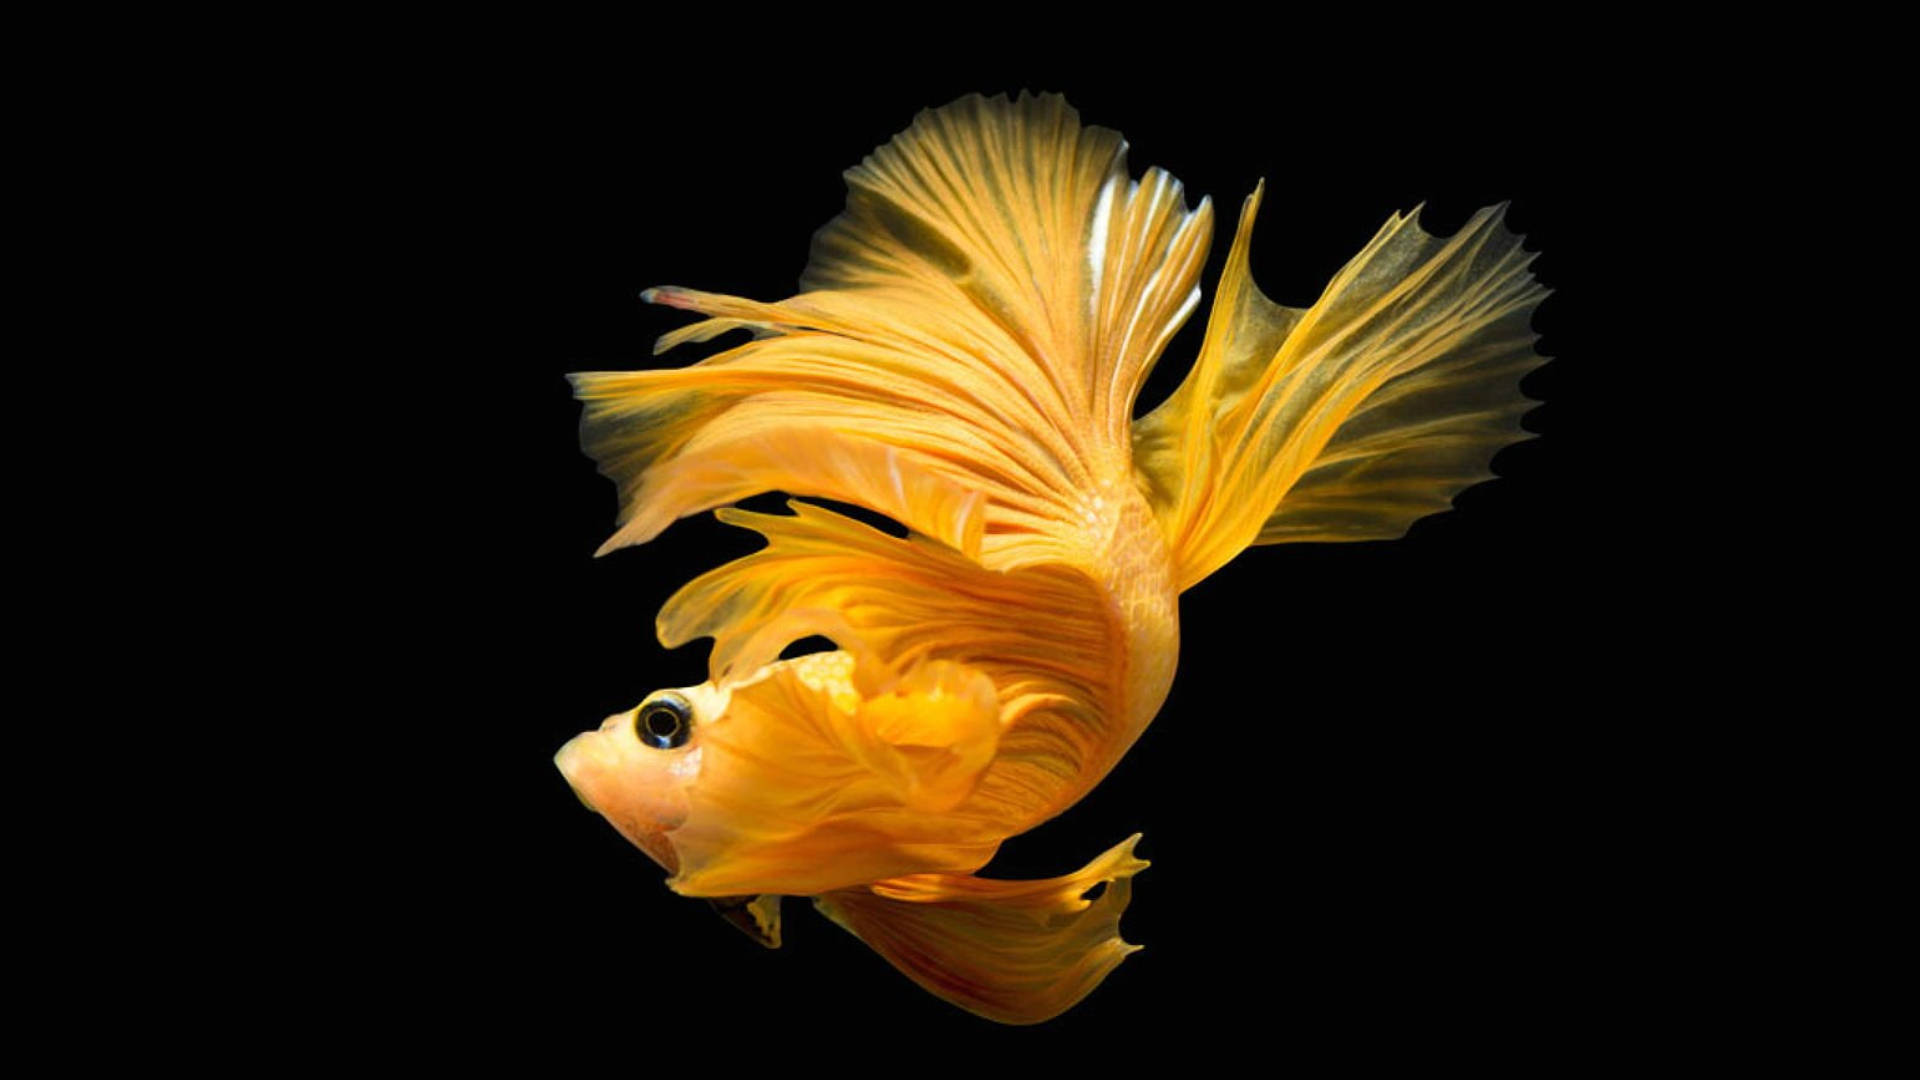 "Golden Tropical Fish Boasting Radiance Underwater" Wallpaper